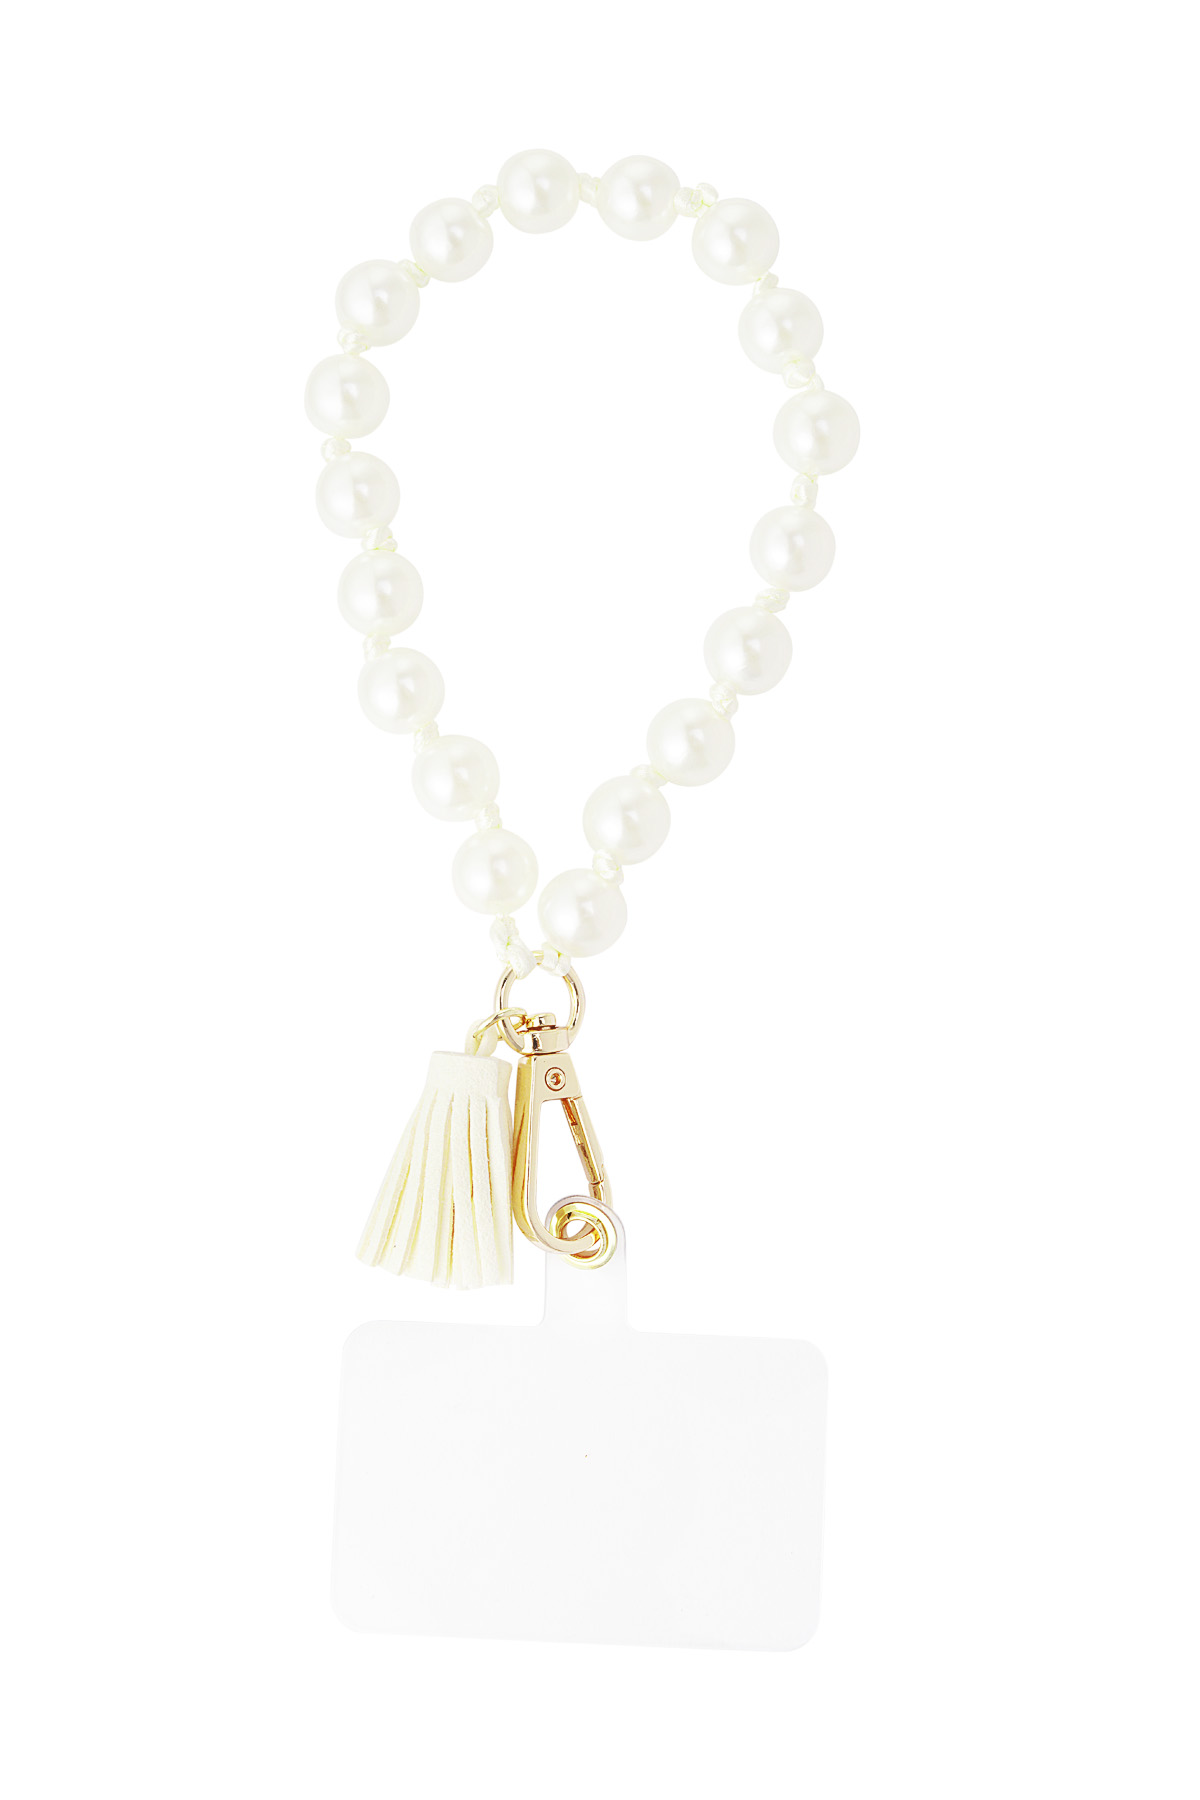 Phone cord girly pearl - white gold